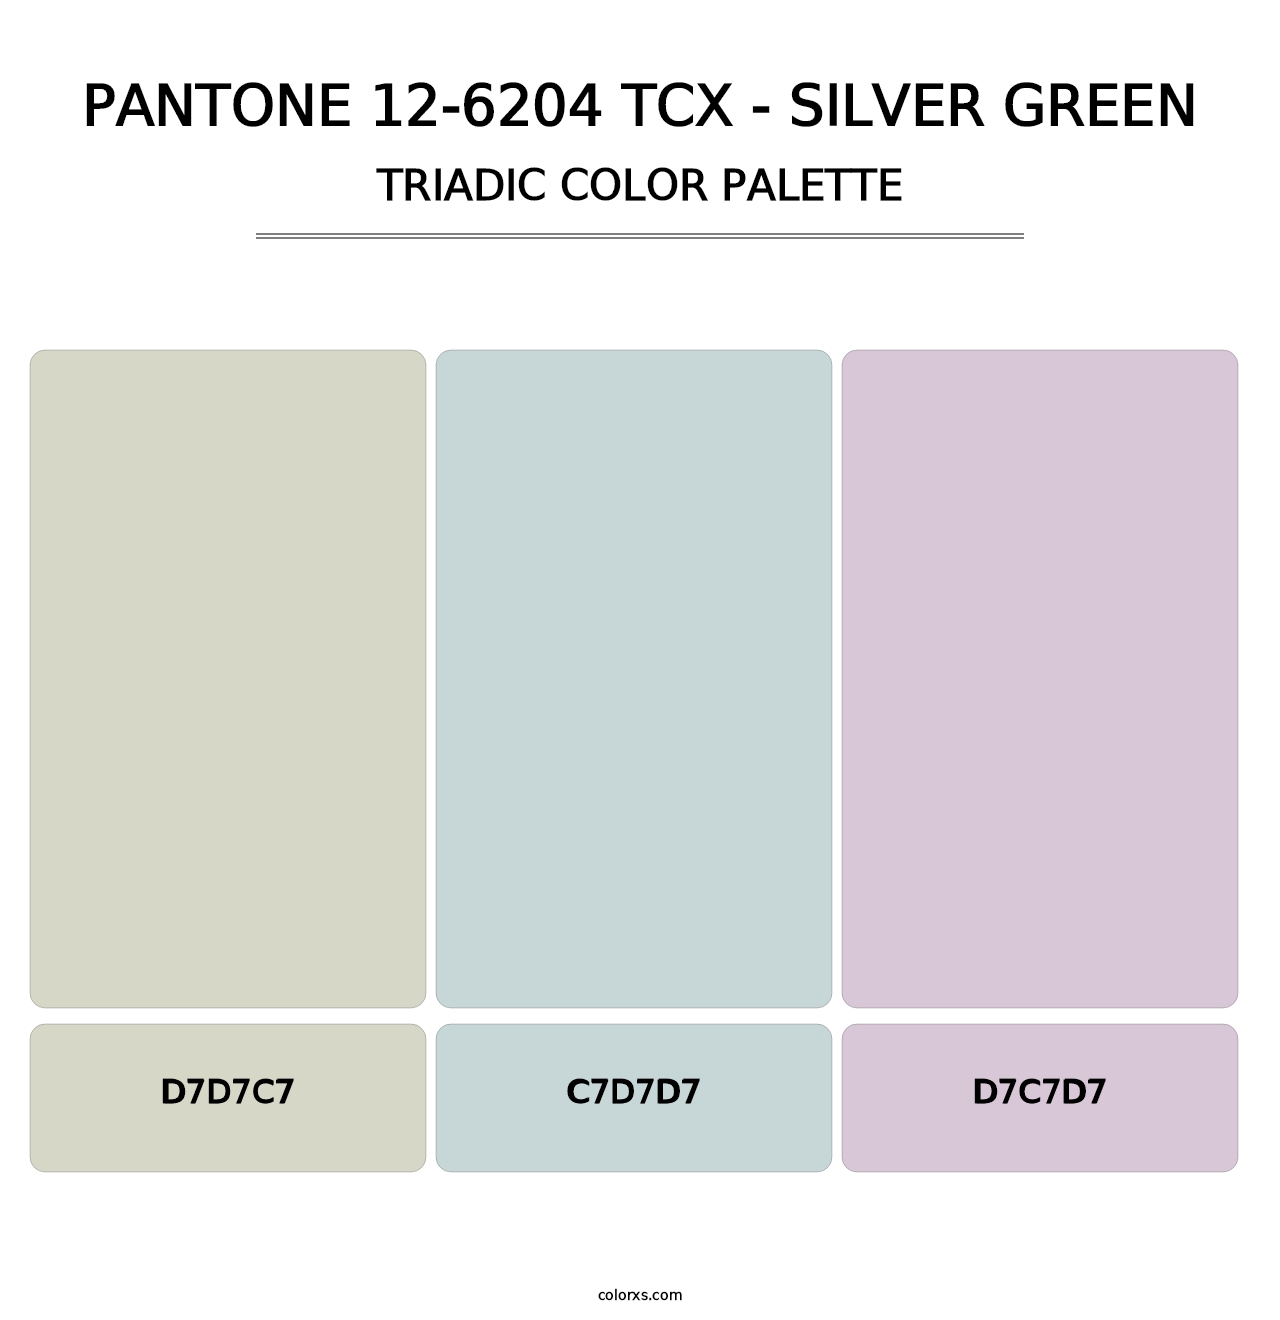 PANTONE 12-6204 TCX - Silver Green - Triadic Color Palette